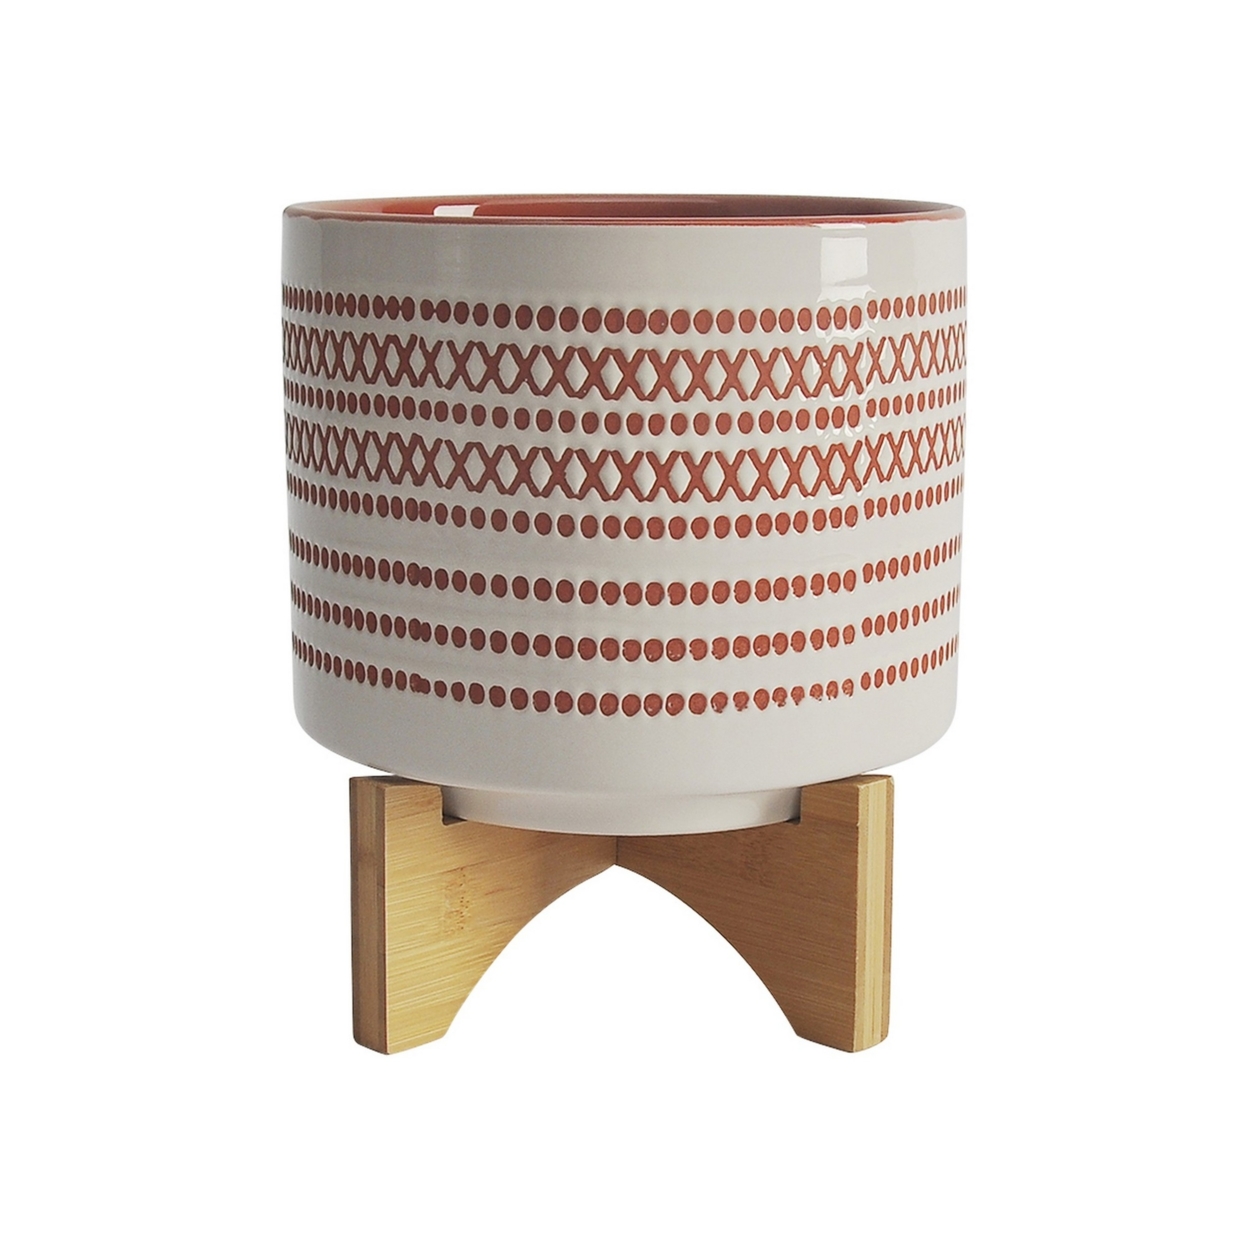 Ceramic Planter With Engraved Tribal Pattern And Wooden Stand, Large, Orange- Saltoro Sherpi